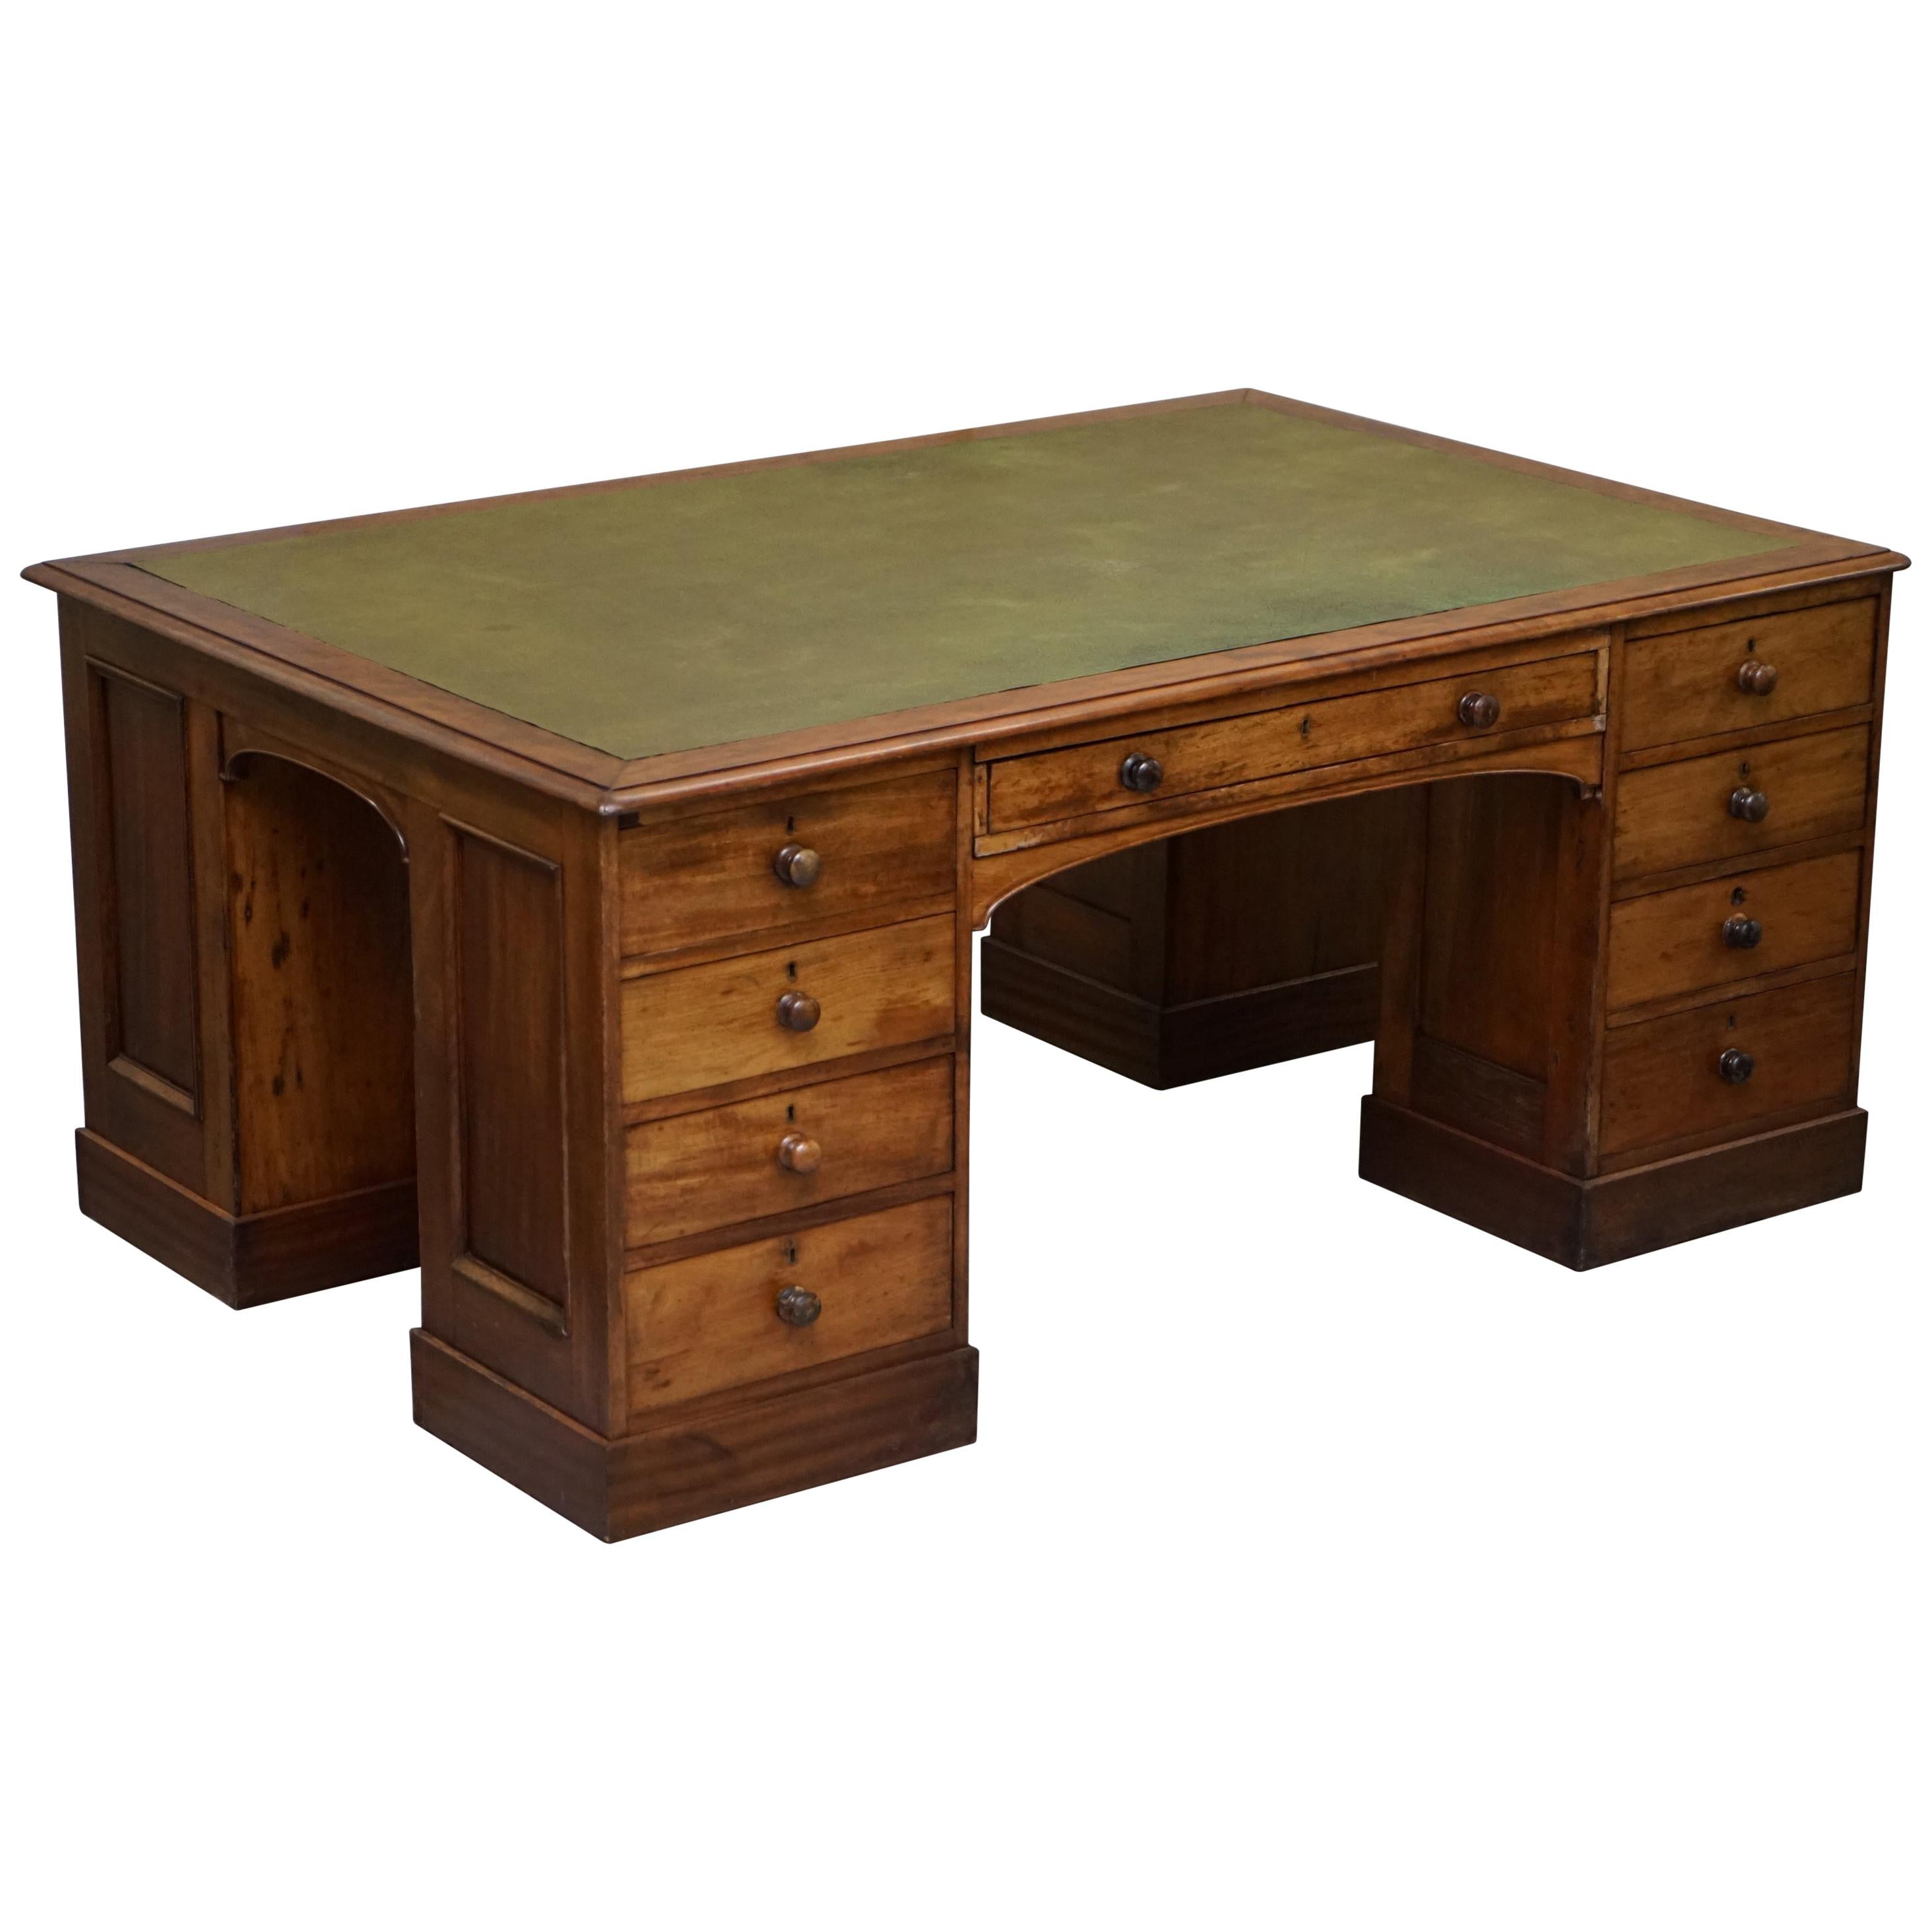 Rare Victorian Four-Sided Quad Pedestal Desk in Flamed Hardwood Green Leather